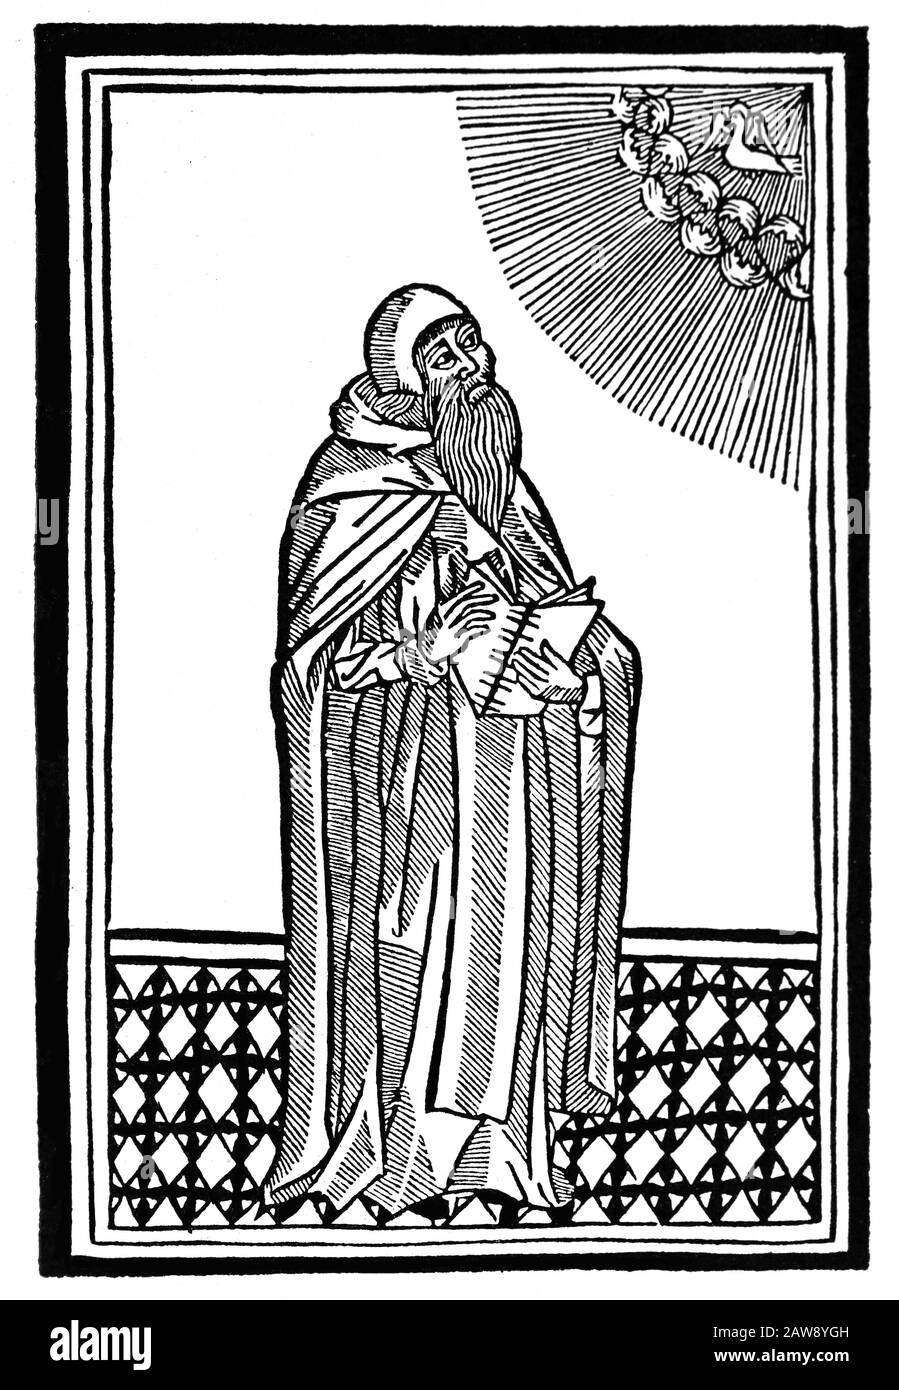 Ramon Llull (1235-1316). Spanish writer and philosopher.  Portrait of author according to Apostrophe Raimundi edition,1504. Stock Photo